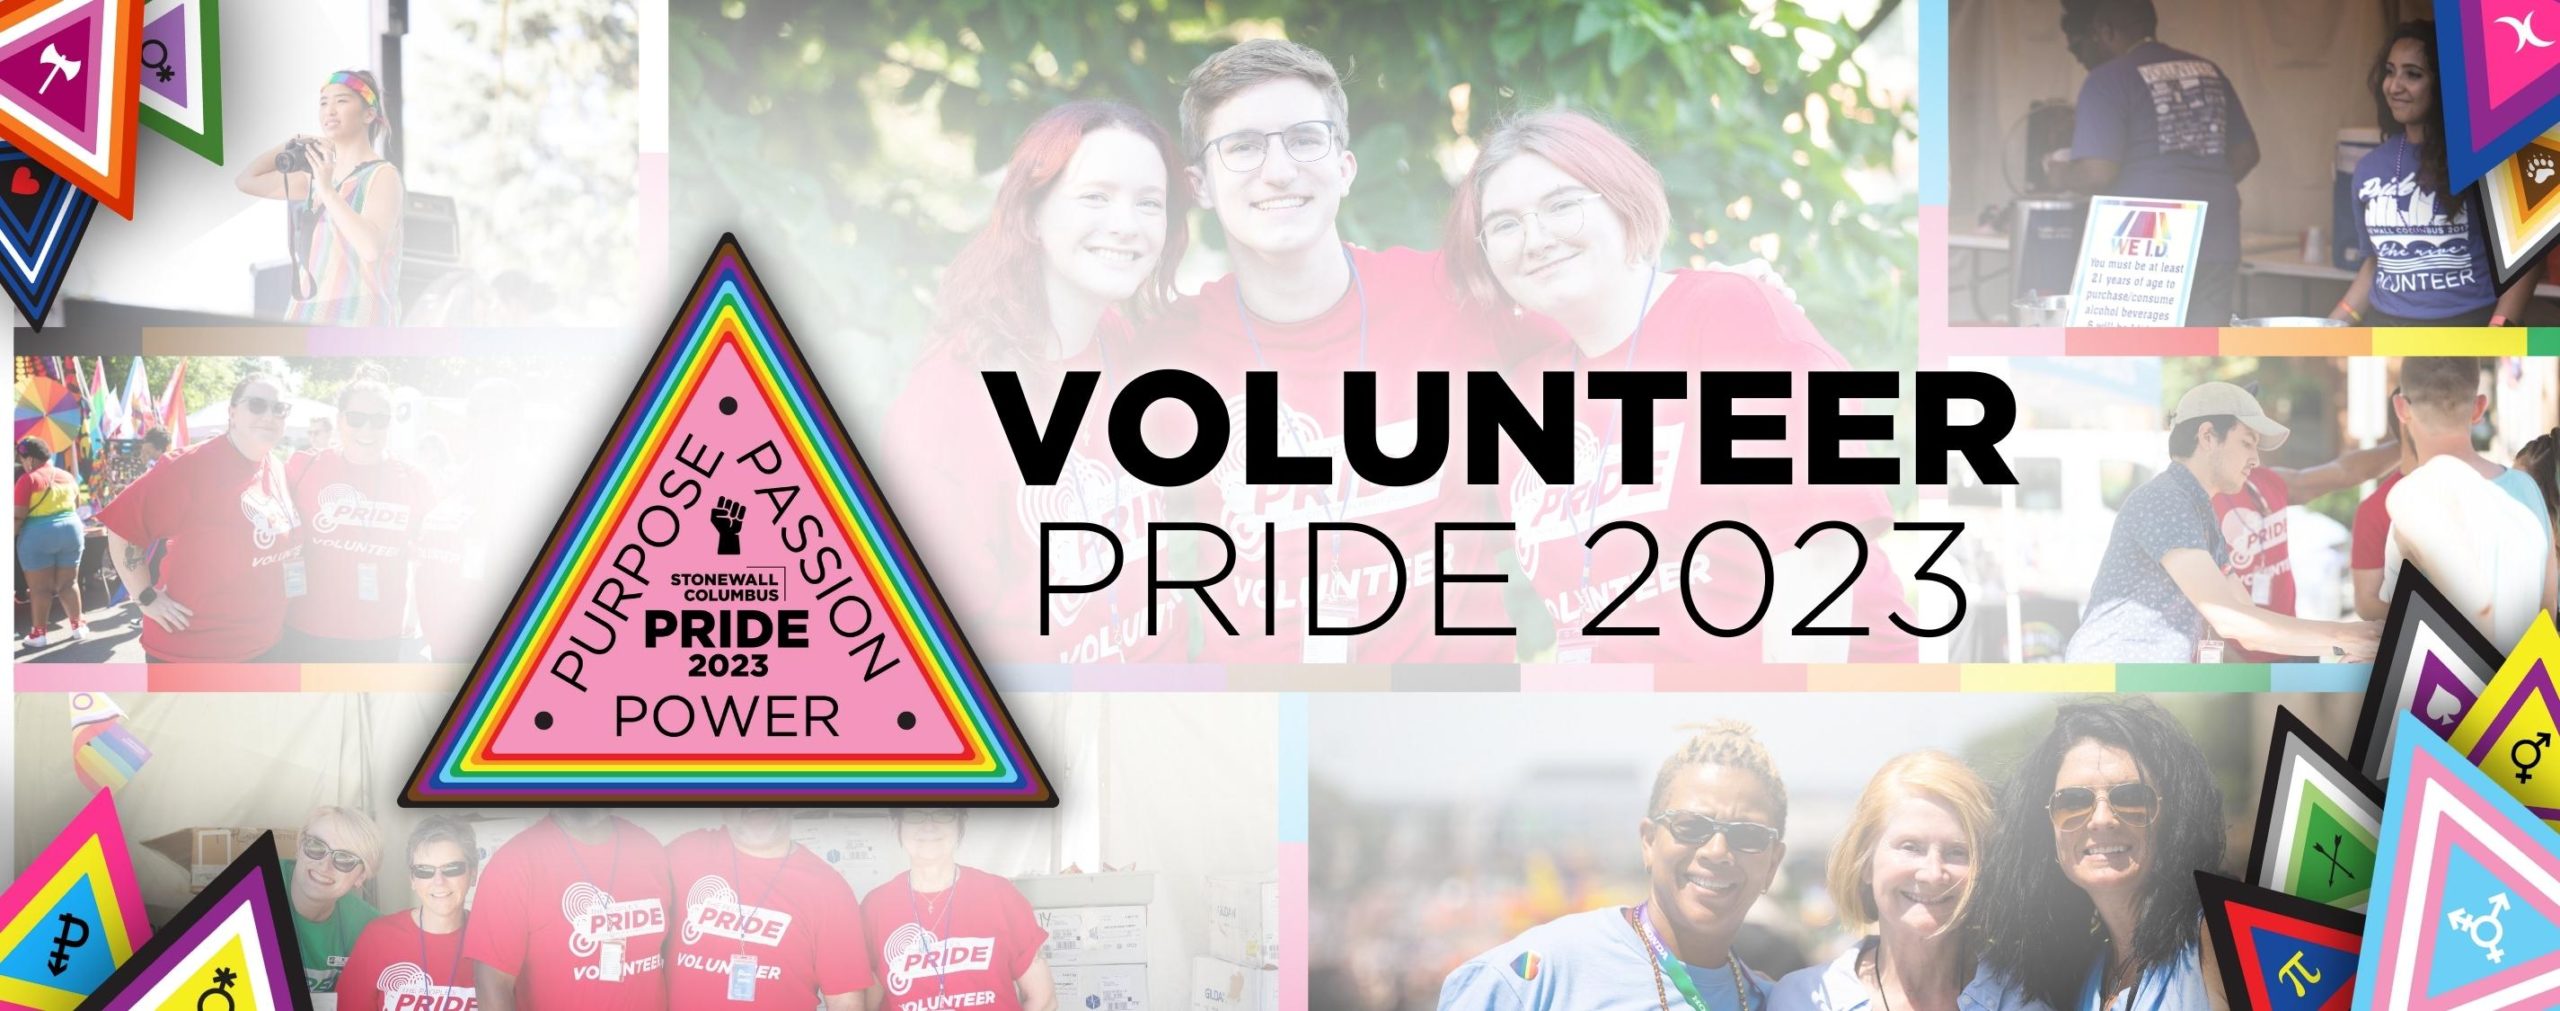 Volunteer for PRIDE Stonewall Columbus